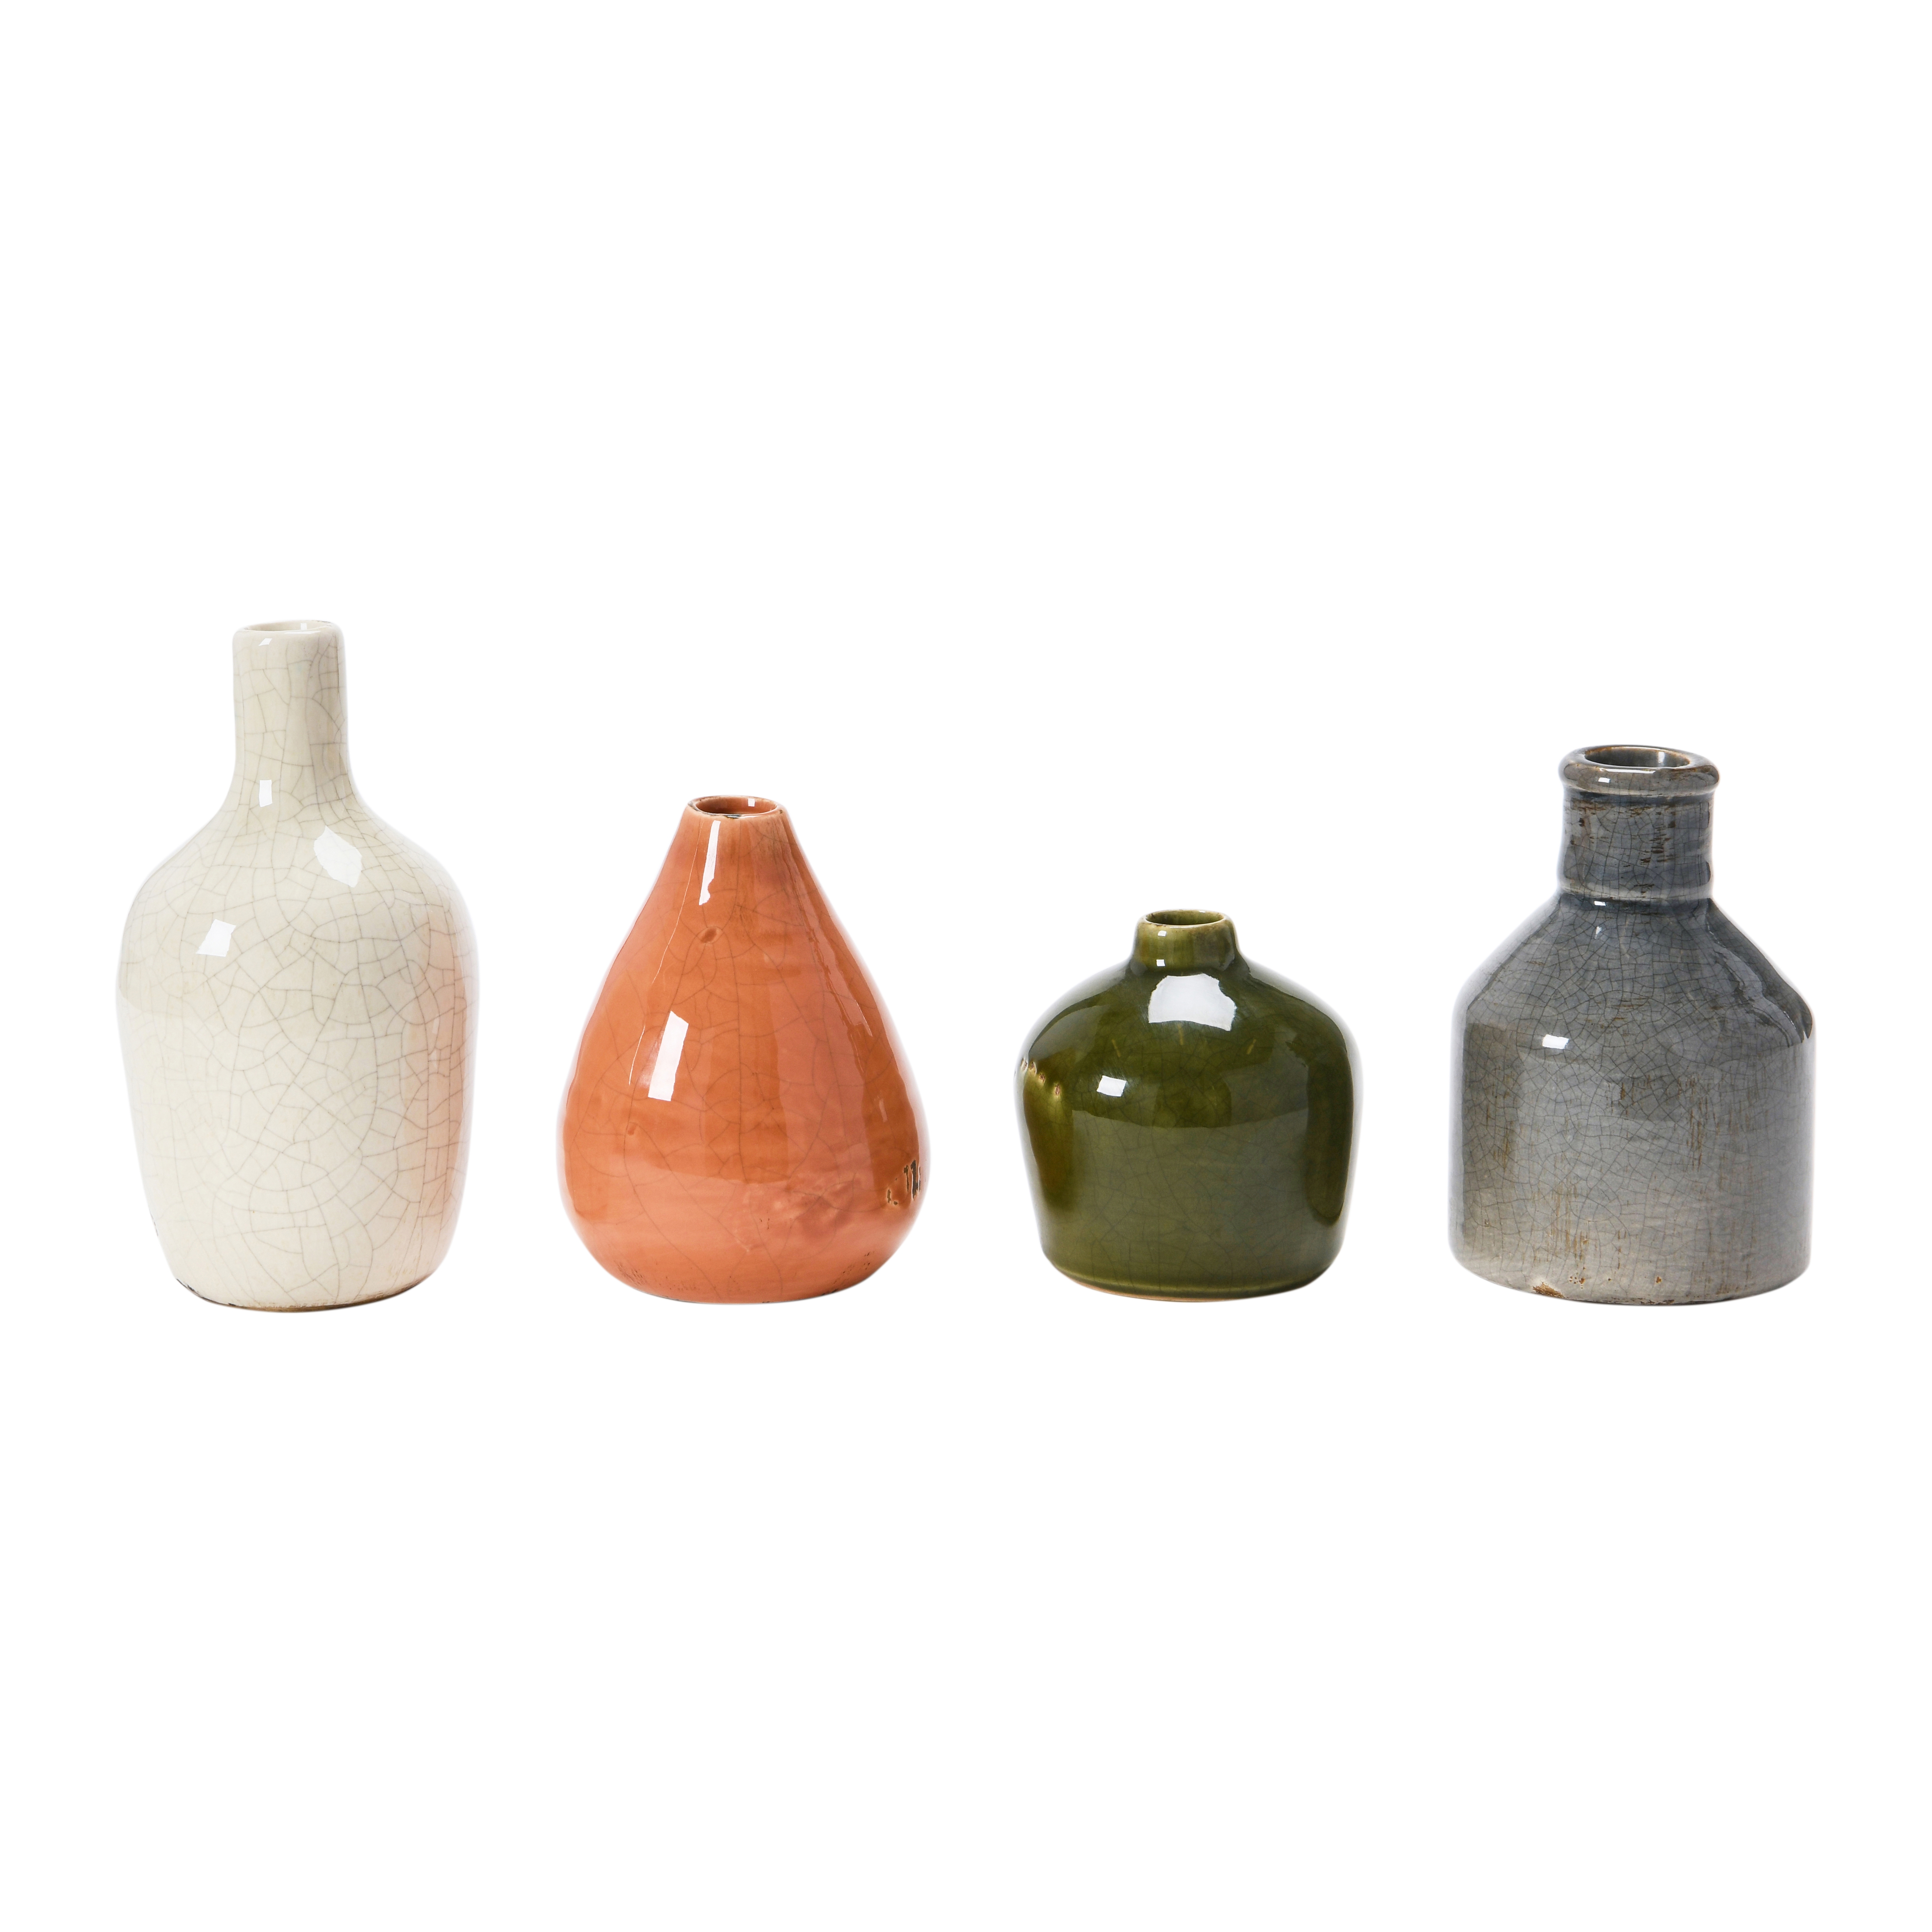 Stoneware Bud Vases in Crackle Glaze, Olive/Terracotta Tones, Set of 4 - Image 0